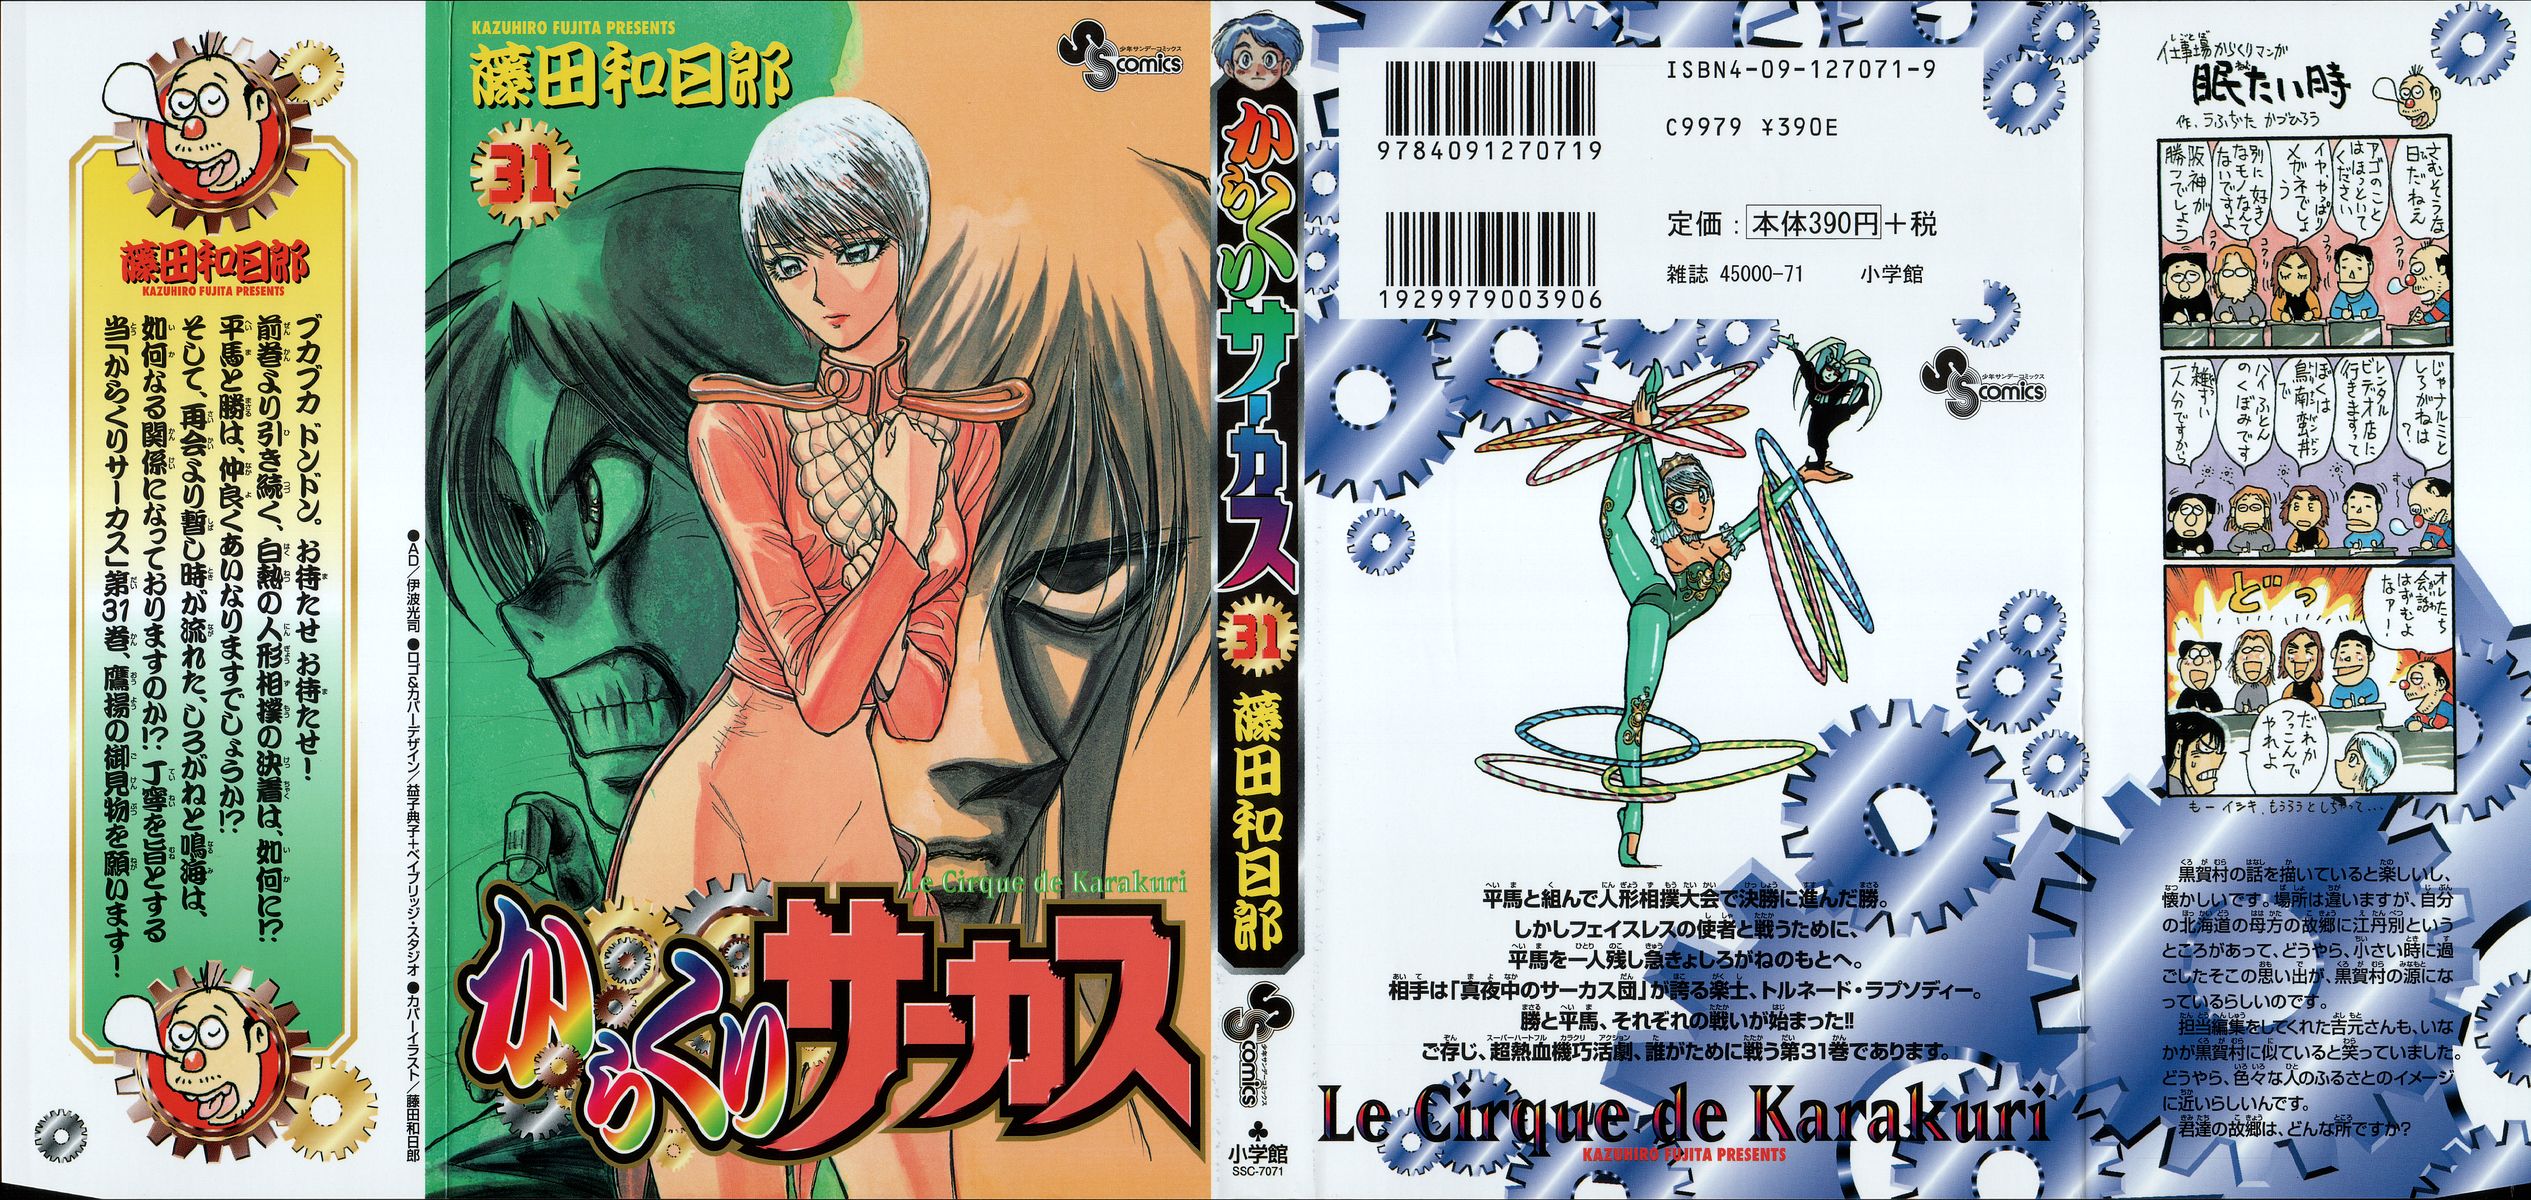 Karakuri Circus Chapter 296: Main Part - Welcome To The Kuroga Village - Act 14: The Beginning Of Two Battles - Picture 3